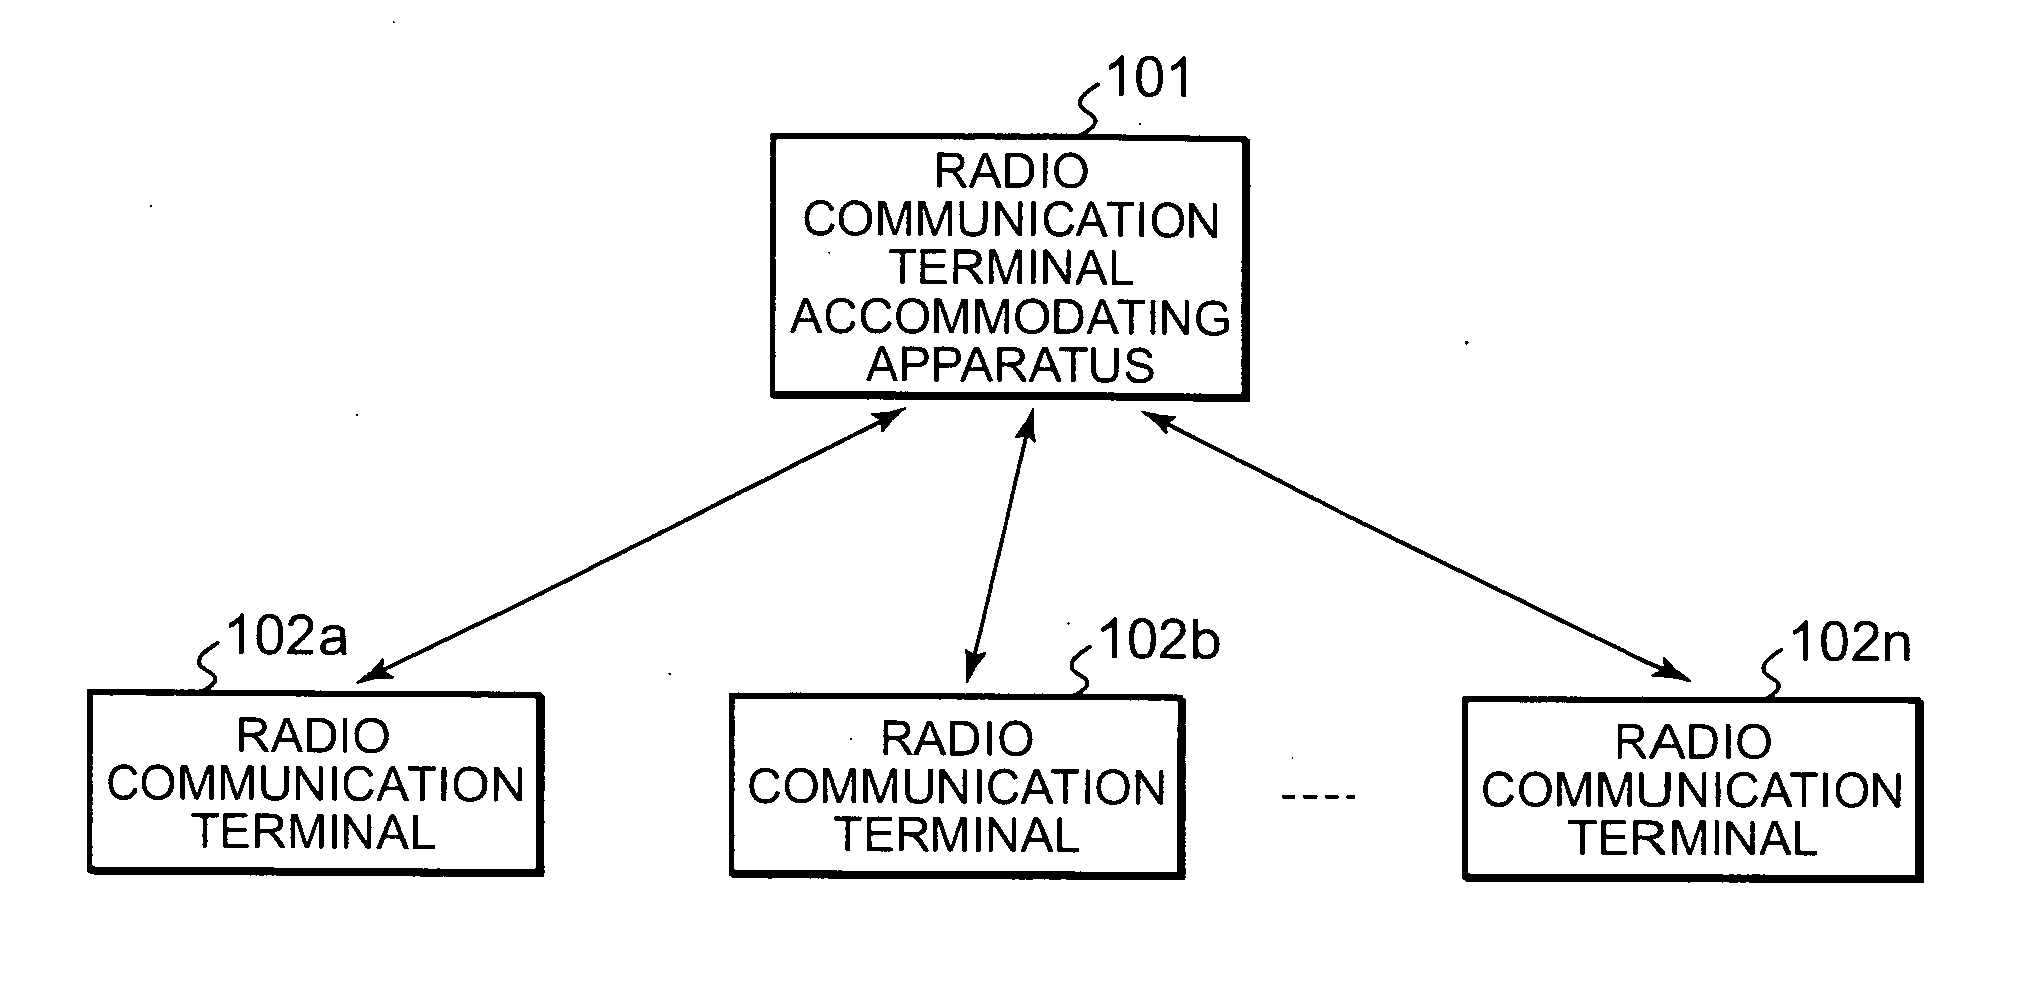 Radio communication method and radio communication terminal accommodating apparatus